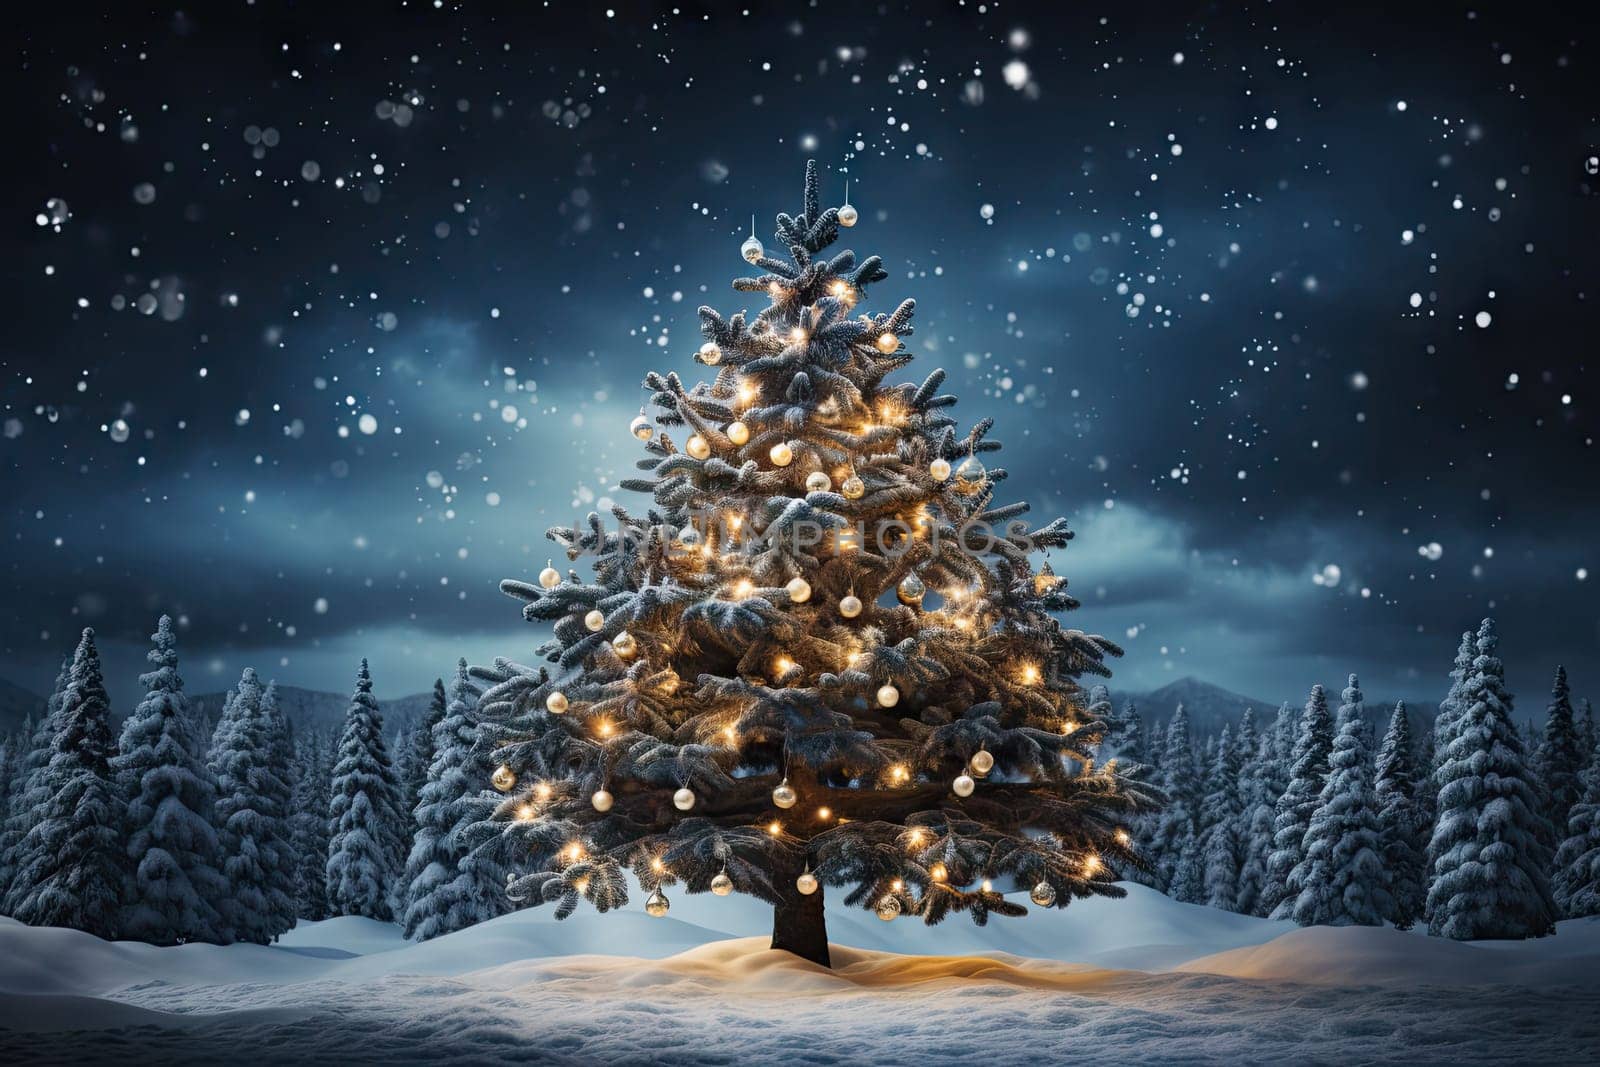 A lit christmas tree in a snowy landscape by golibtolibov